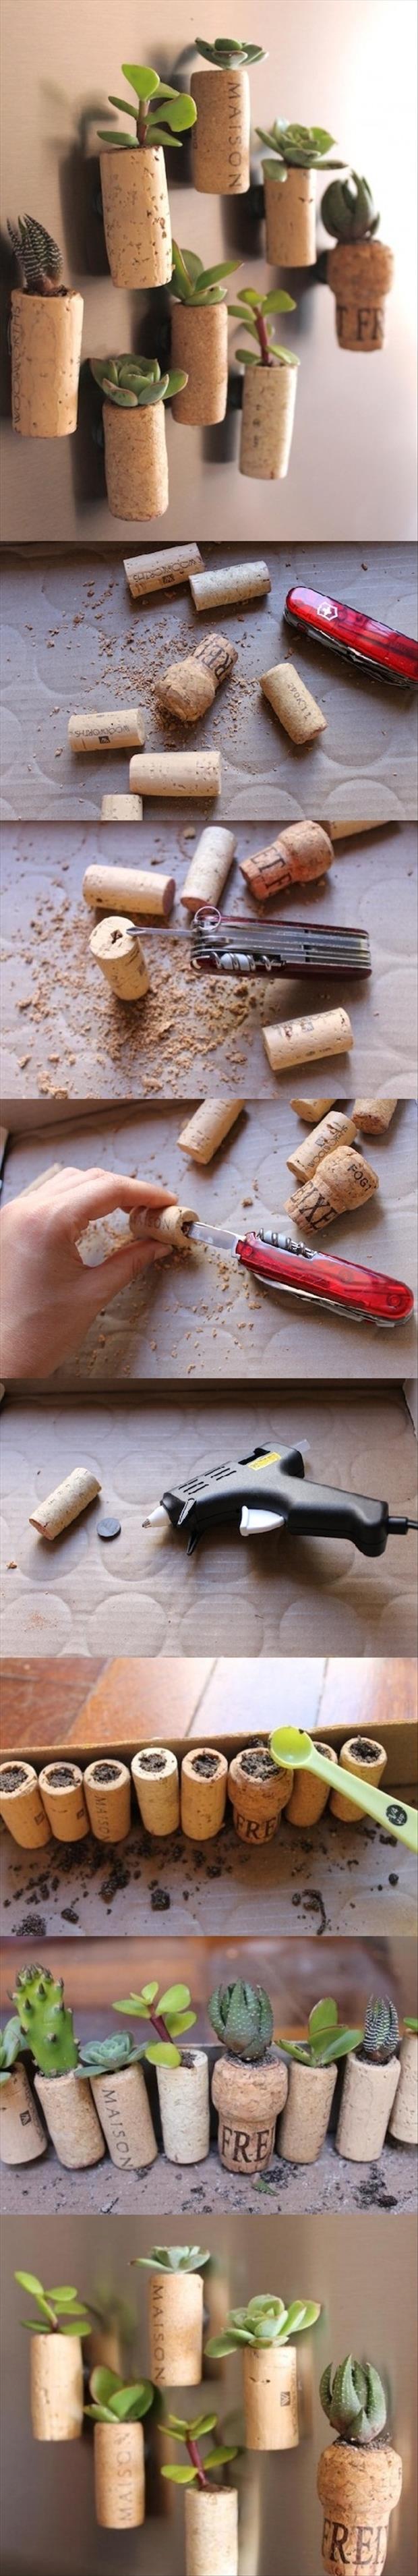 Crafty ideas- DIY cork planters